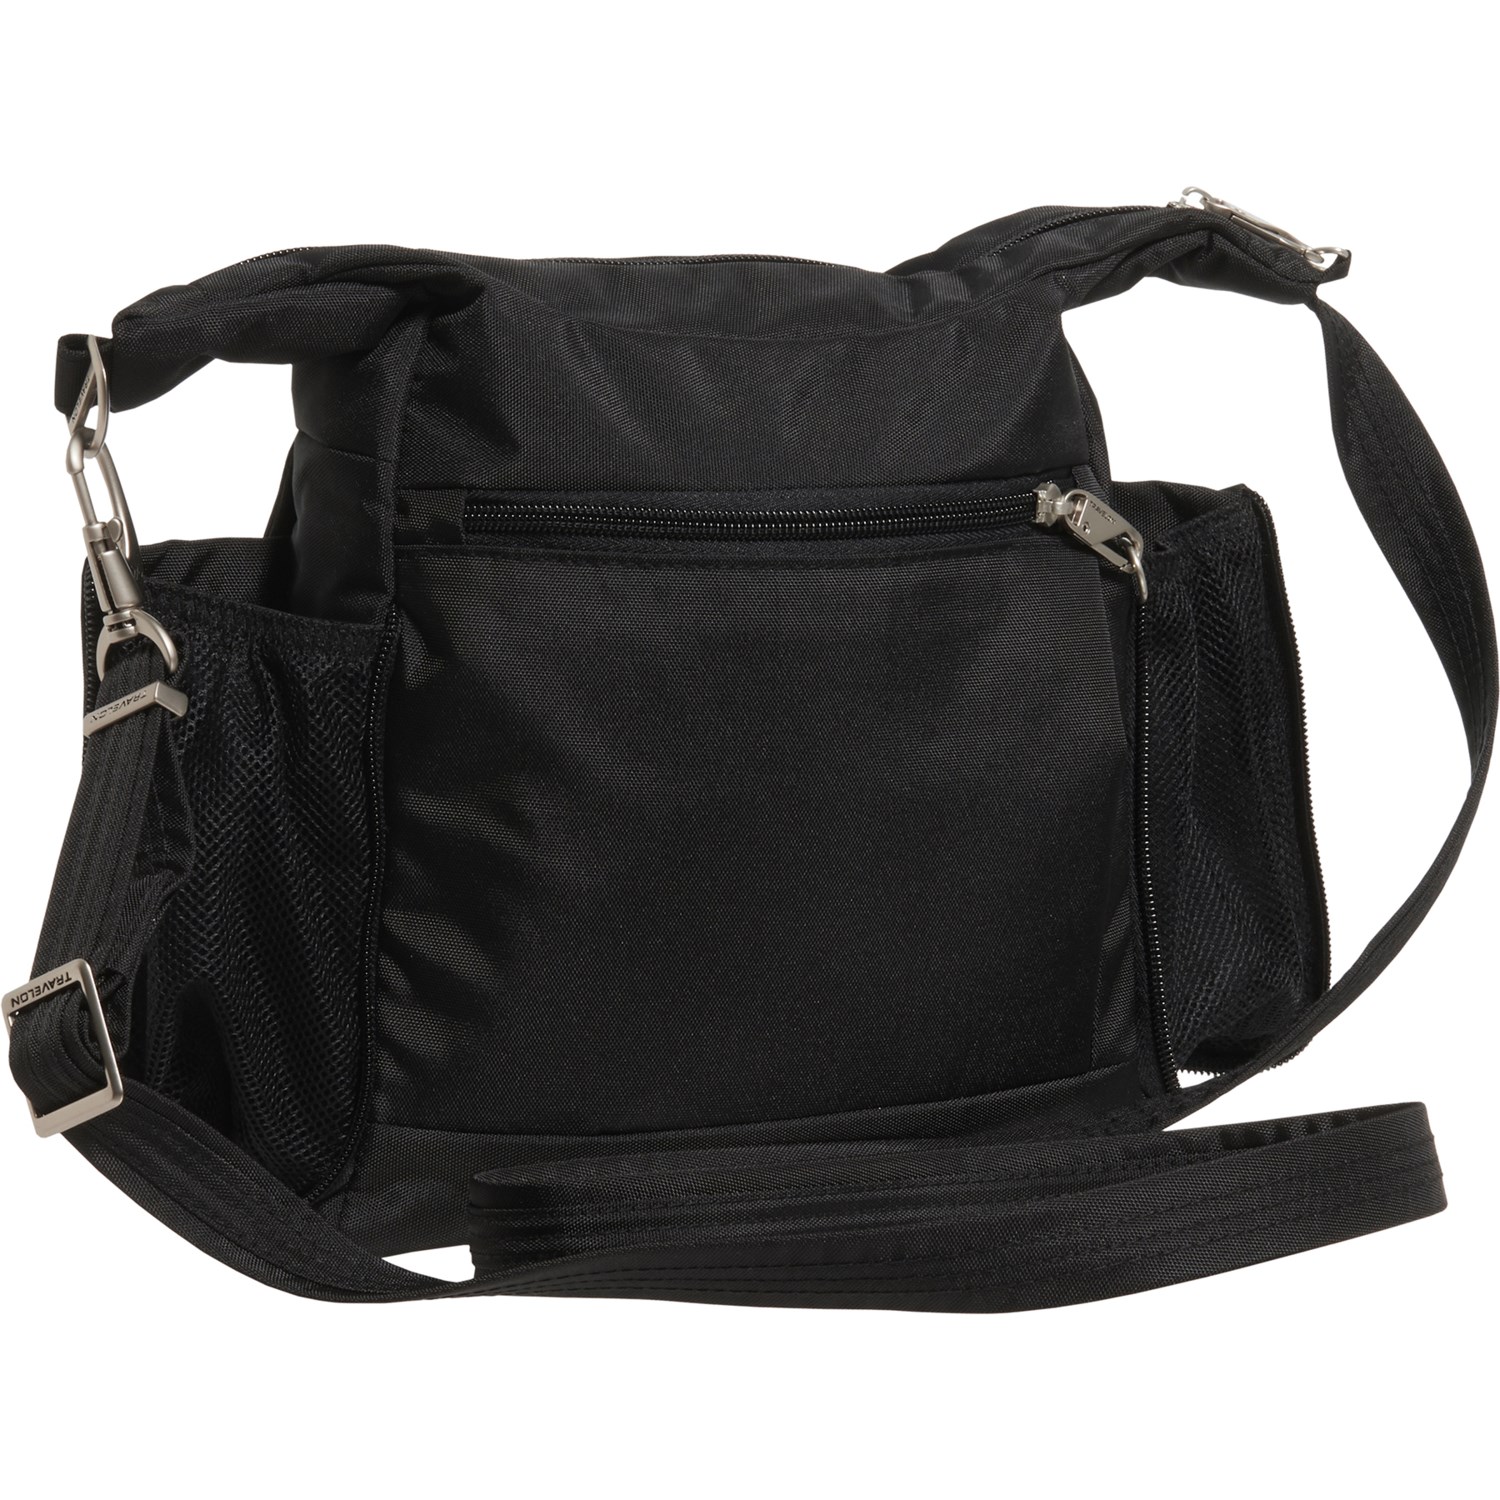 Travelon Anti-Theft Classic Messenger Bag (For Women) - Save 66%